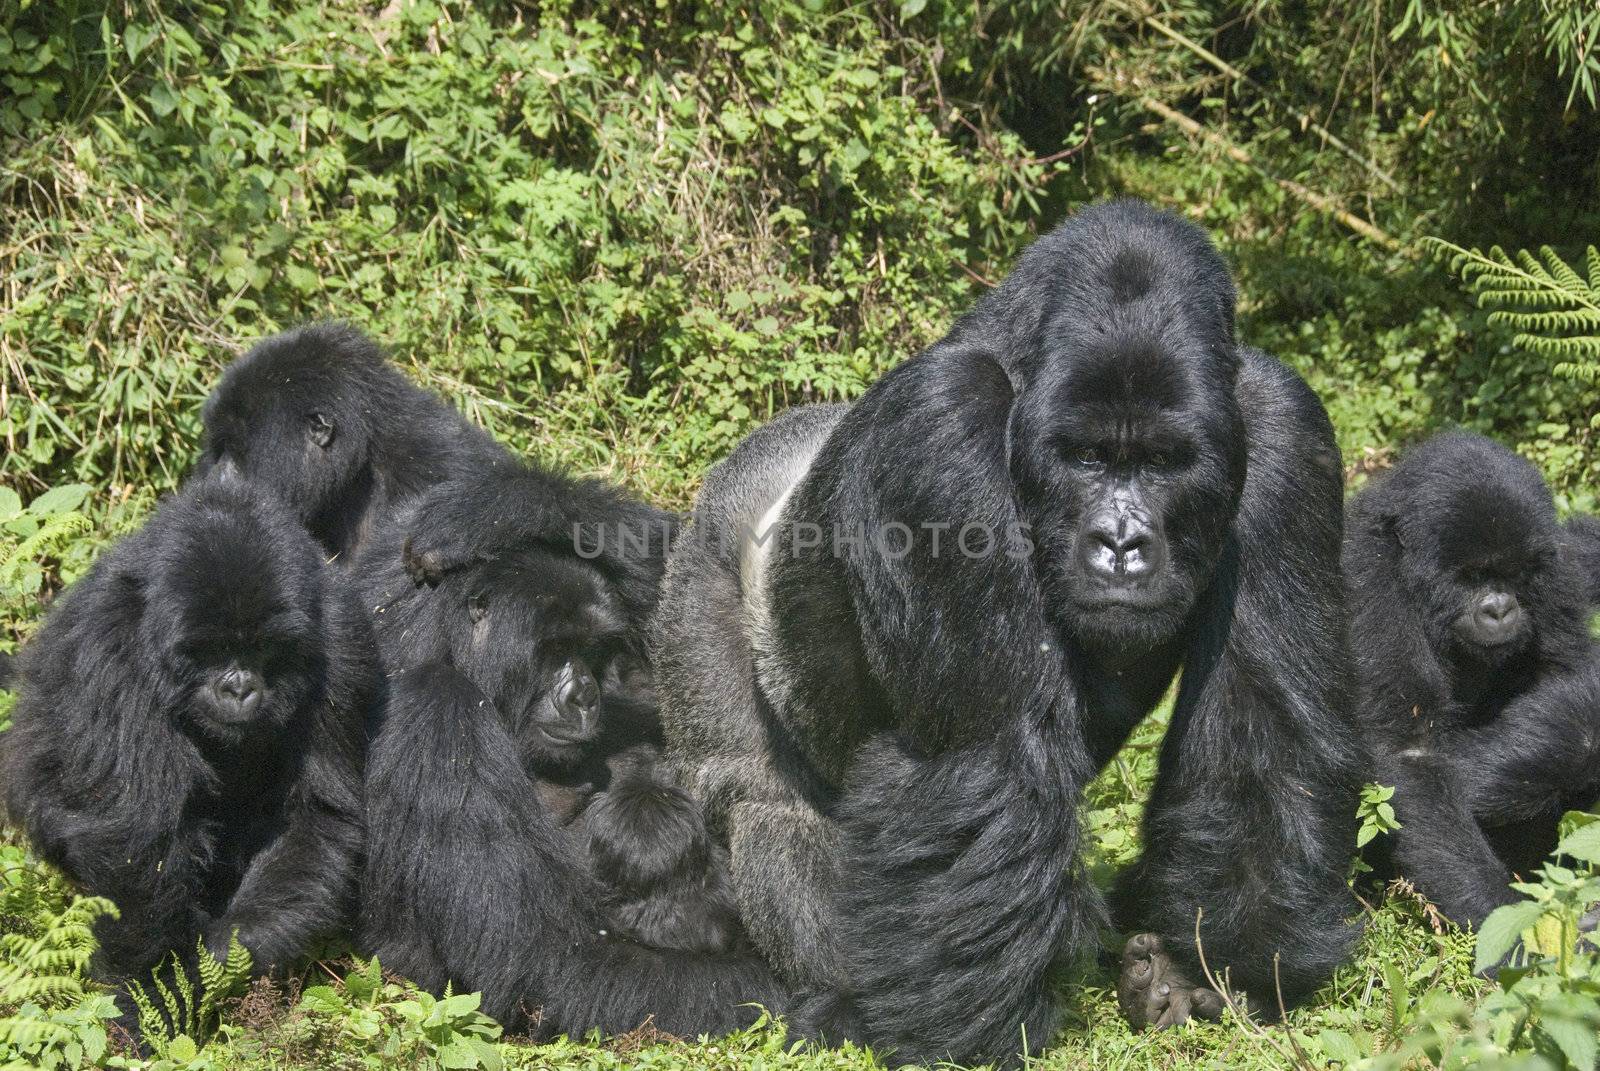 Group of gorillas eating, Rwanda